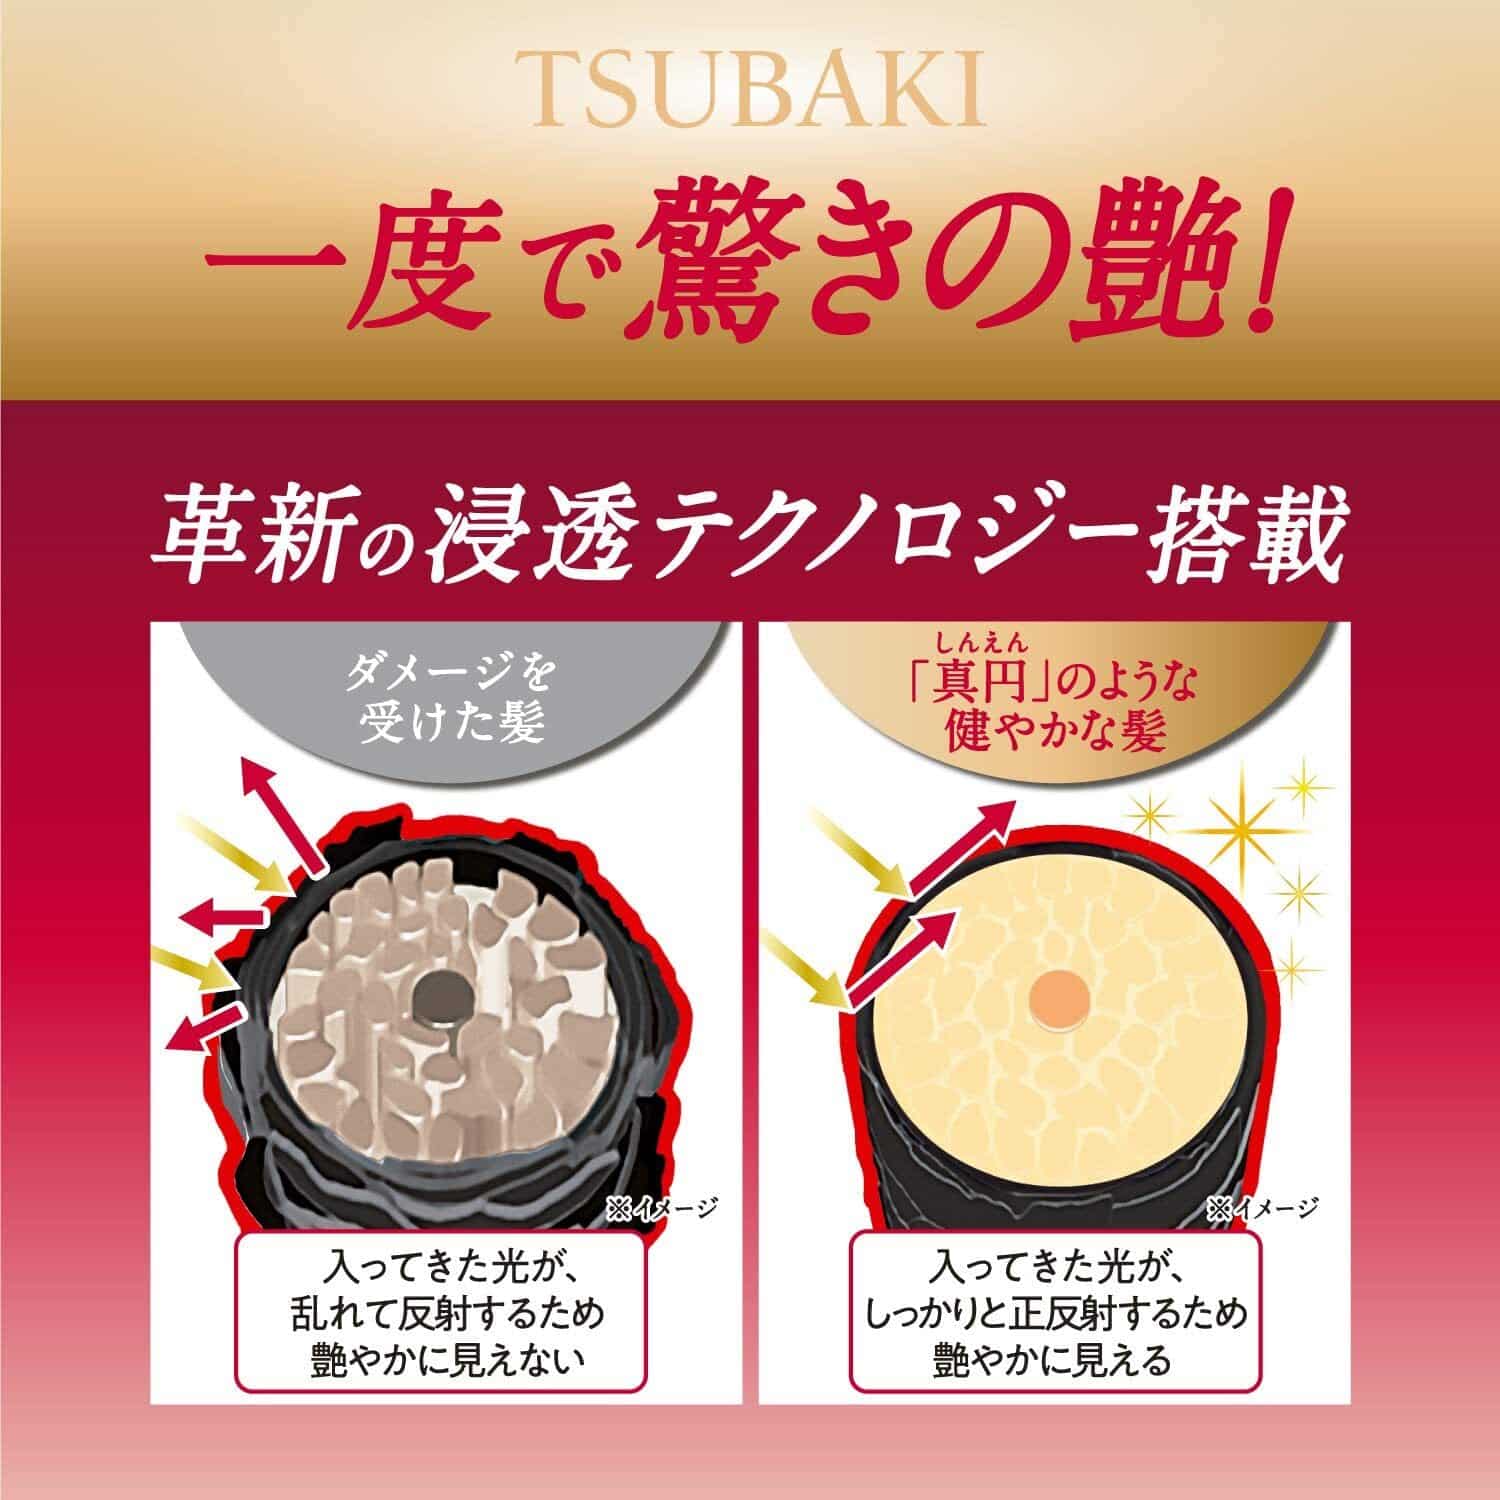 Shiseido TSUBAKI Premium Repair Shampoo 490ml